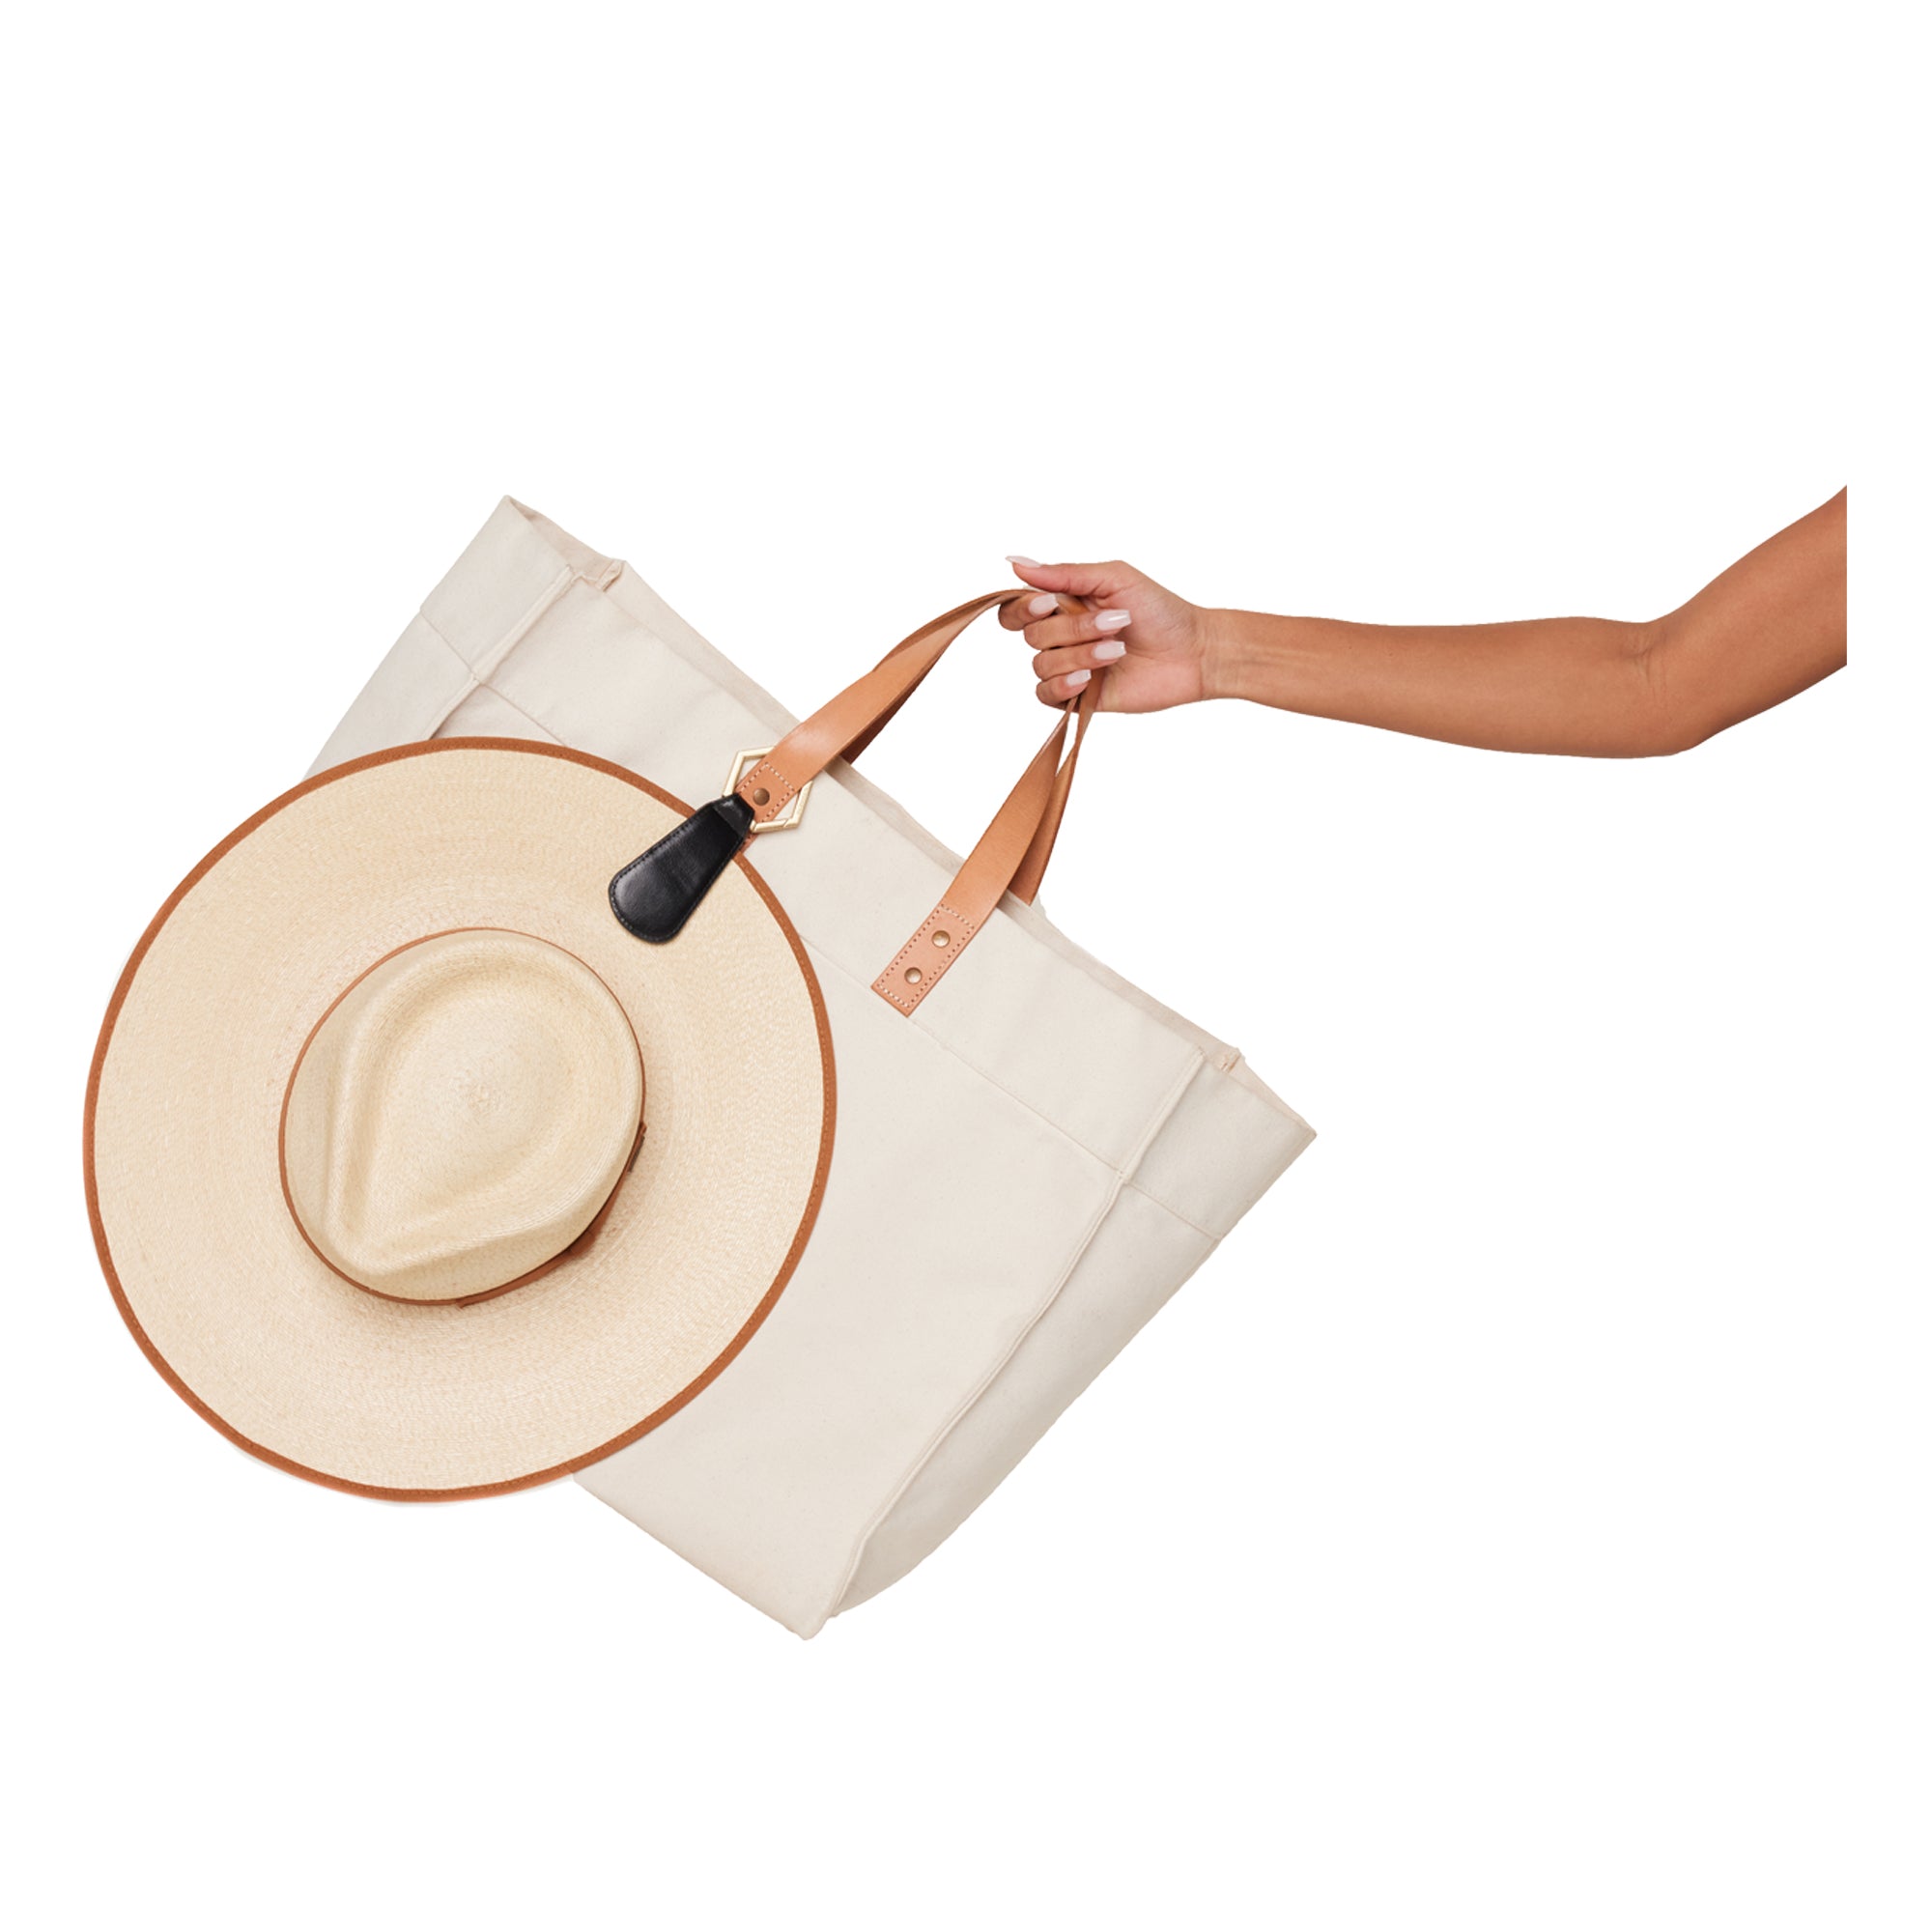 Hat Carrying Beach Bag in Dark Straw